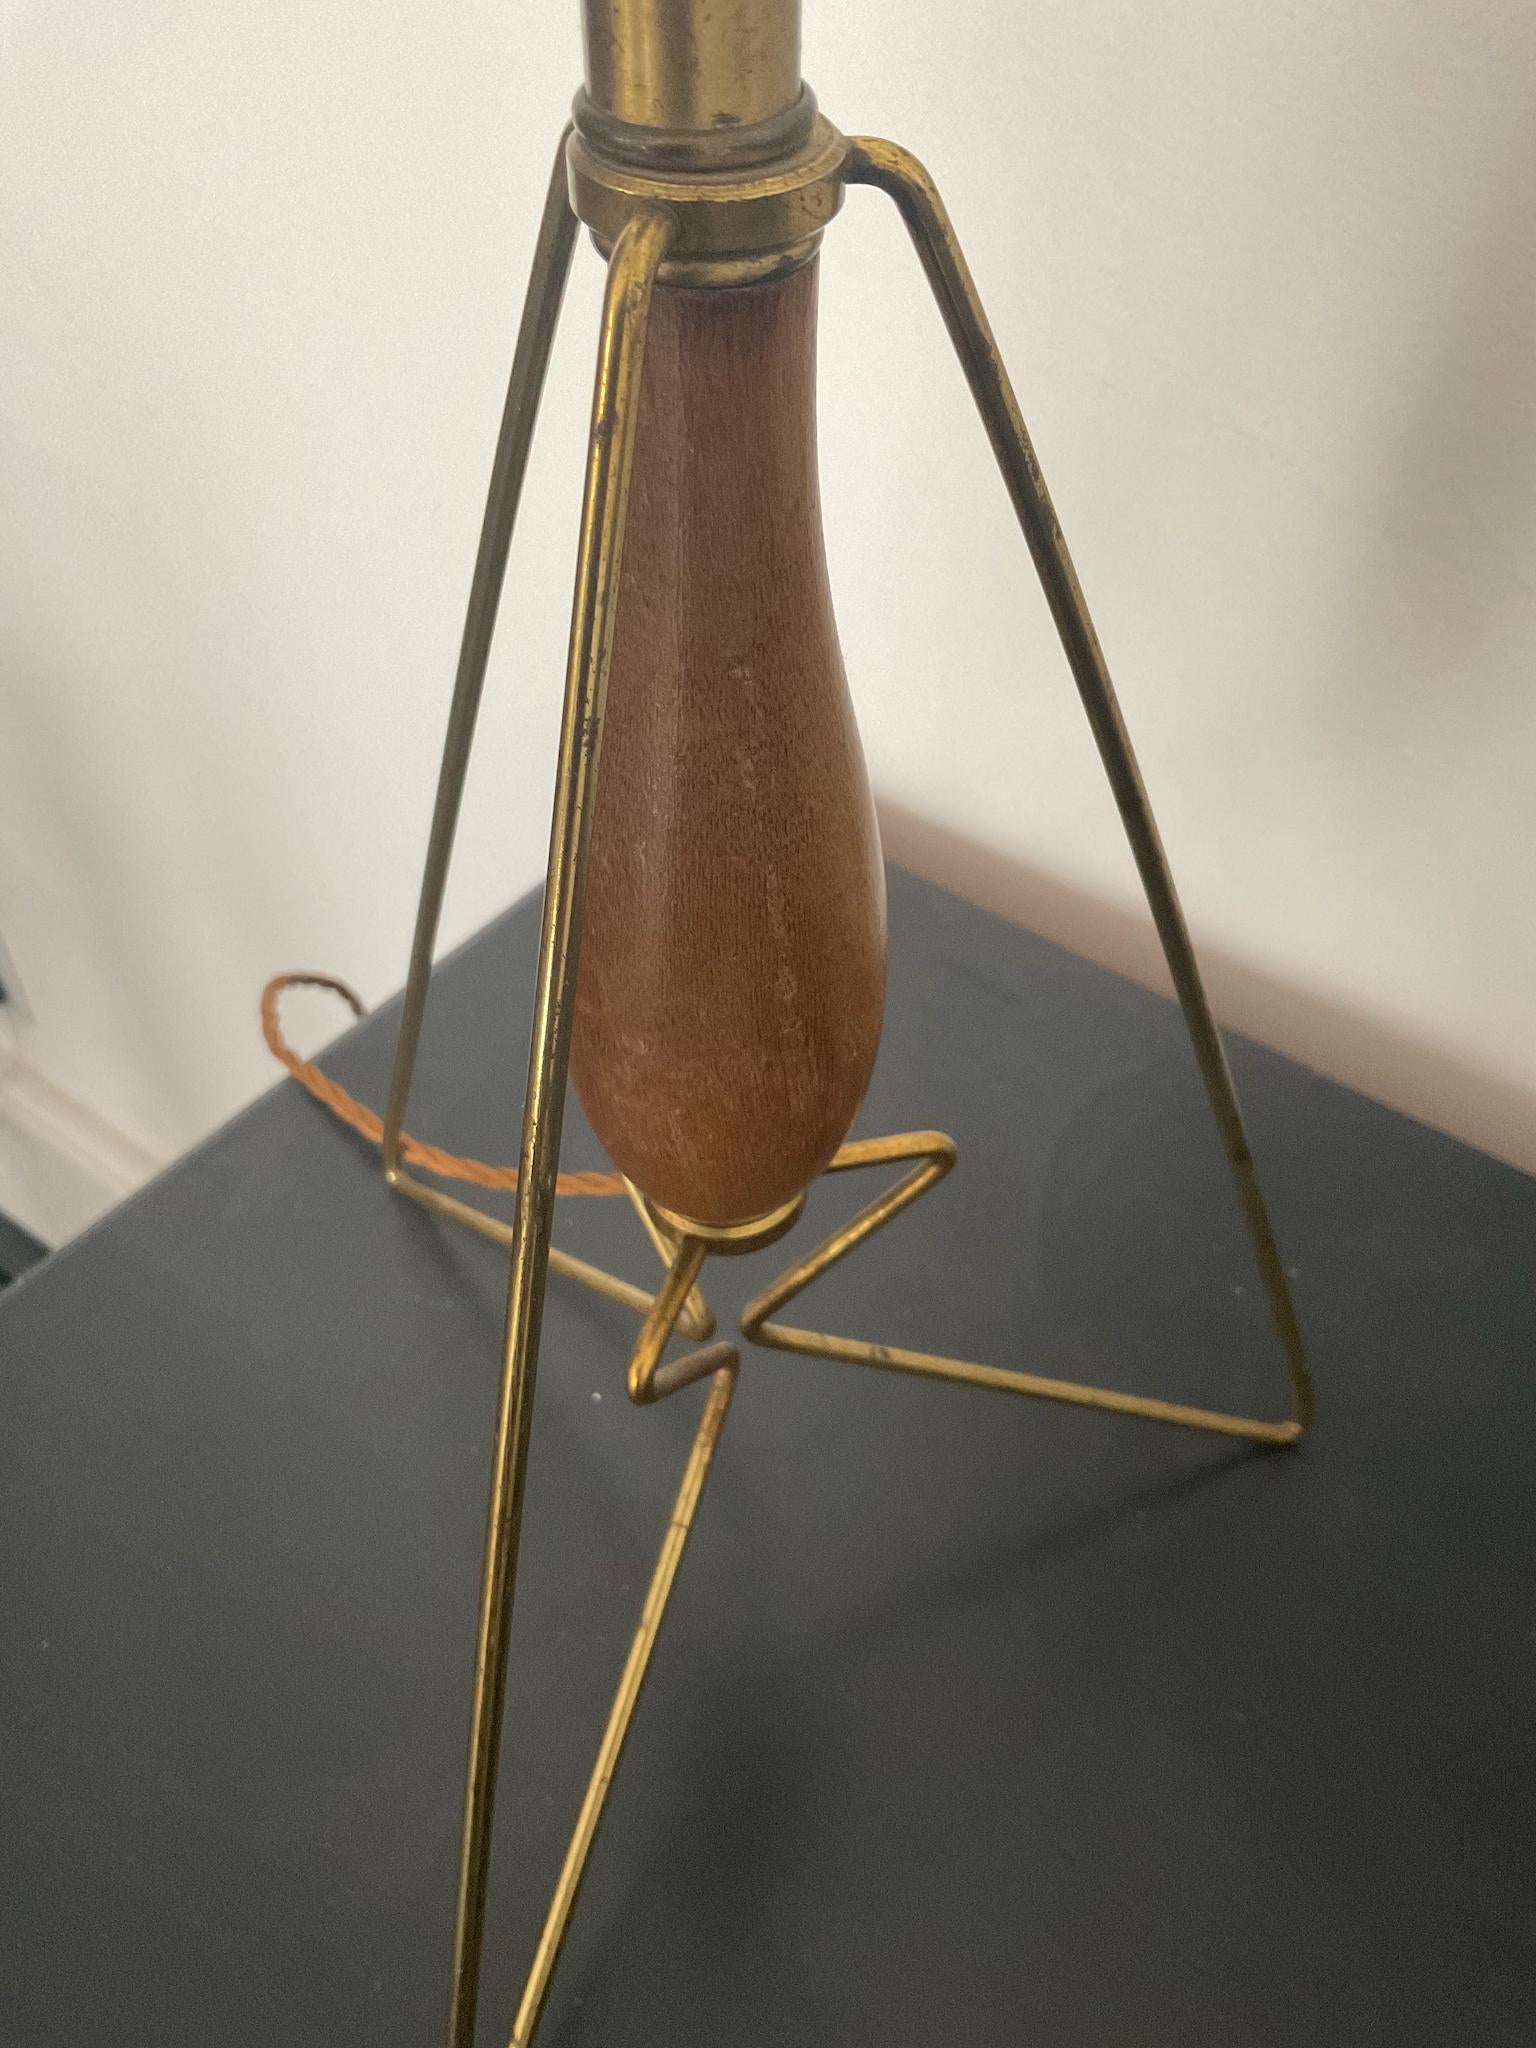 Midcentury Wood and Brass Tripod Lamp, European 1